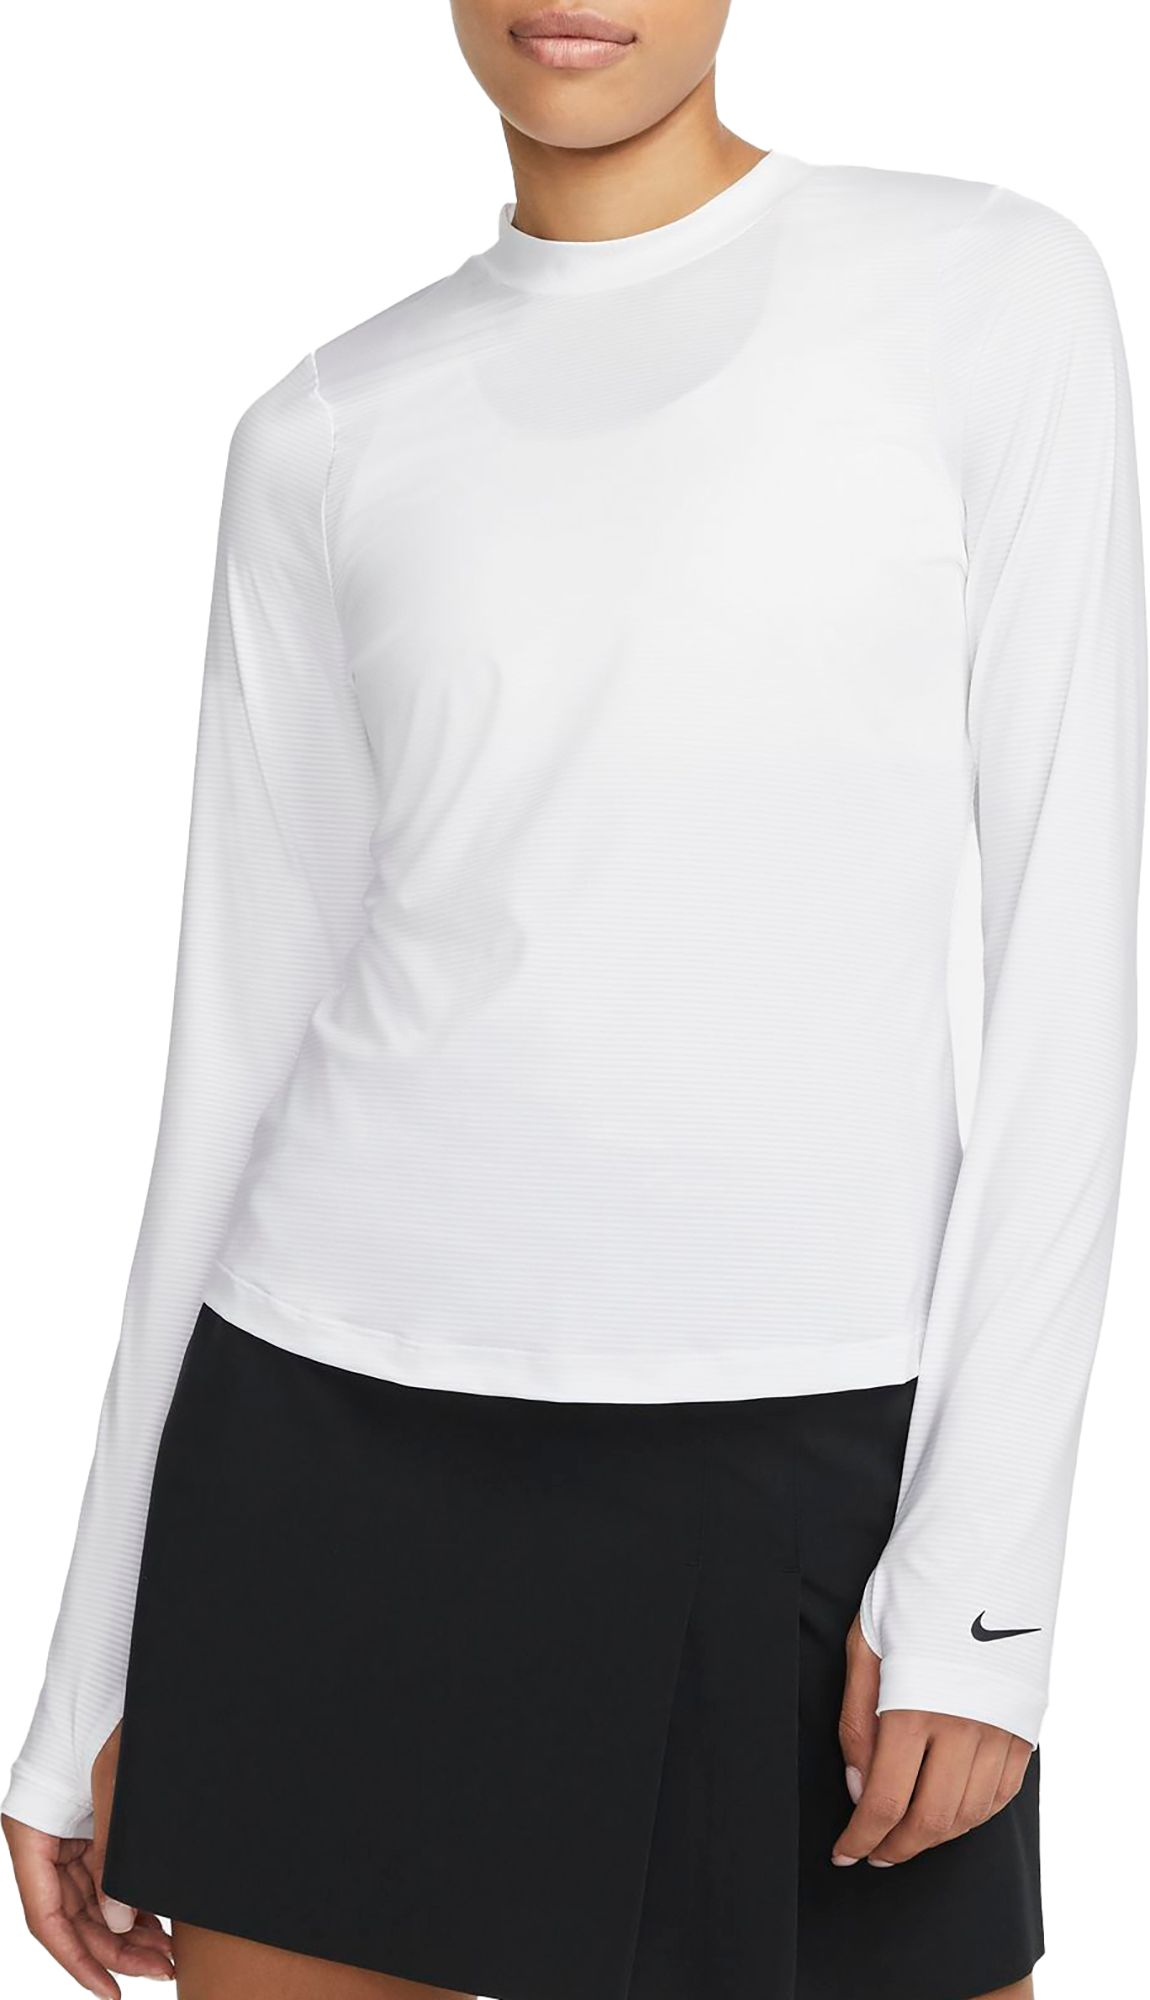 Nike Women's Dri-FIT UV Victory Long Sleeve Golf Top, Medium, White